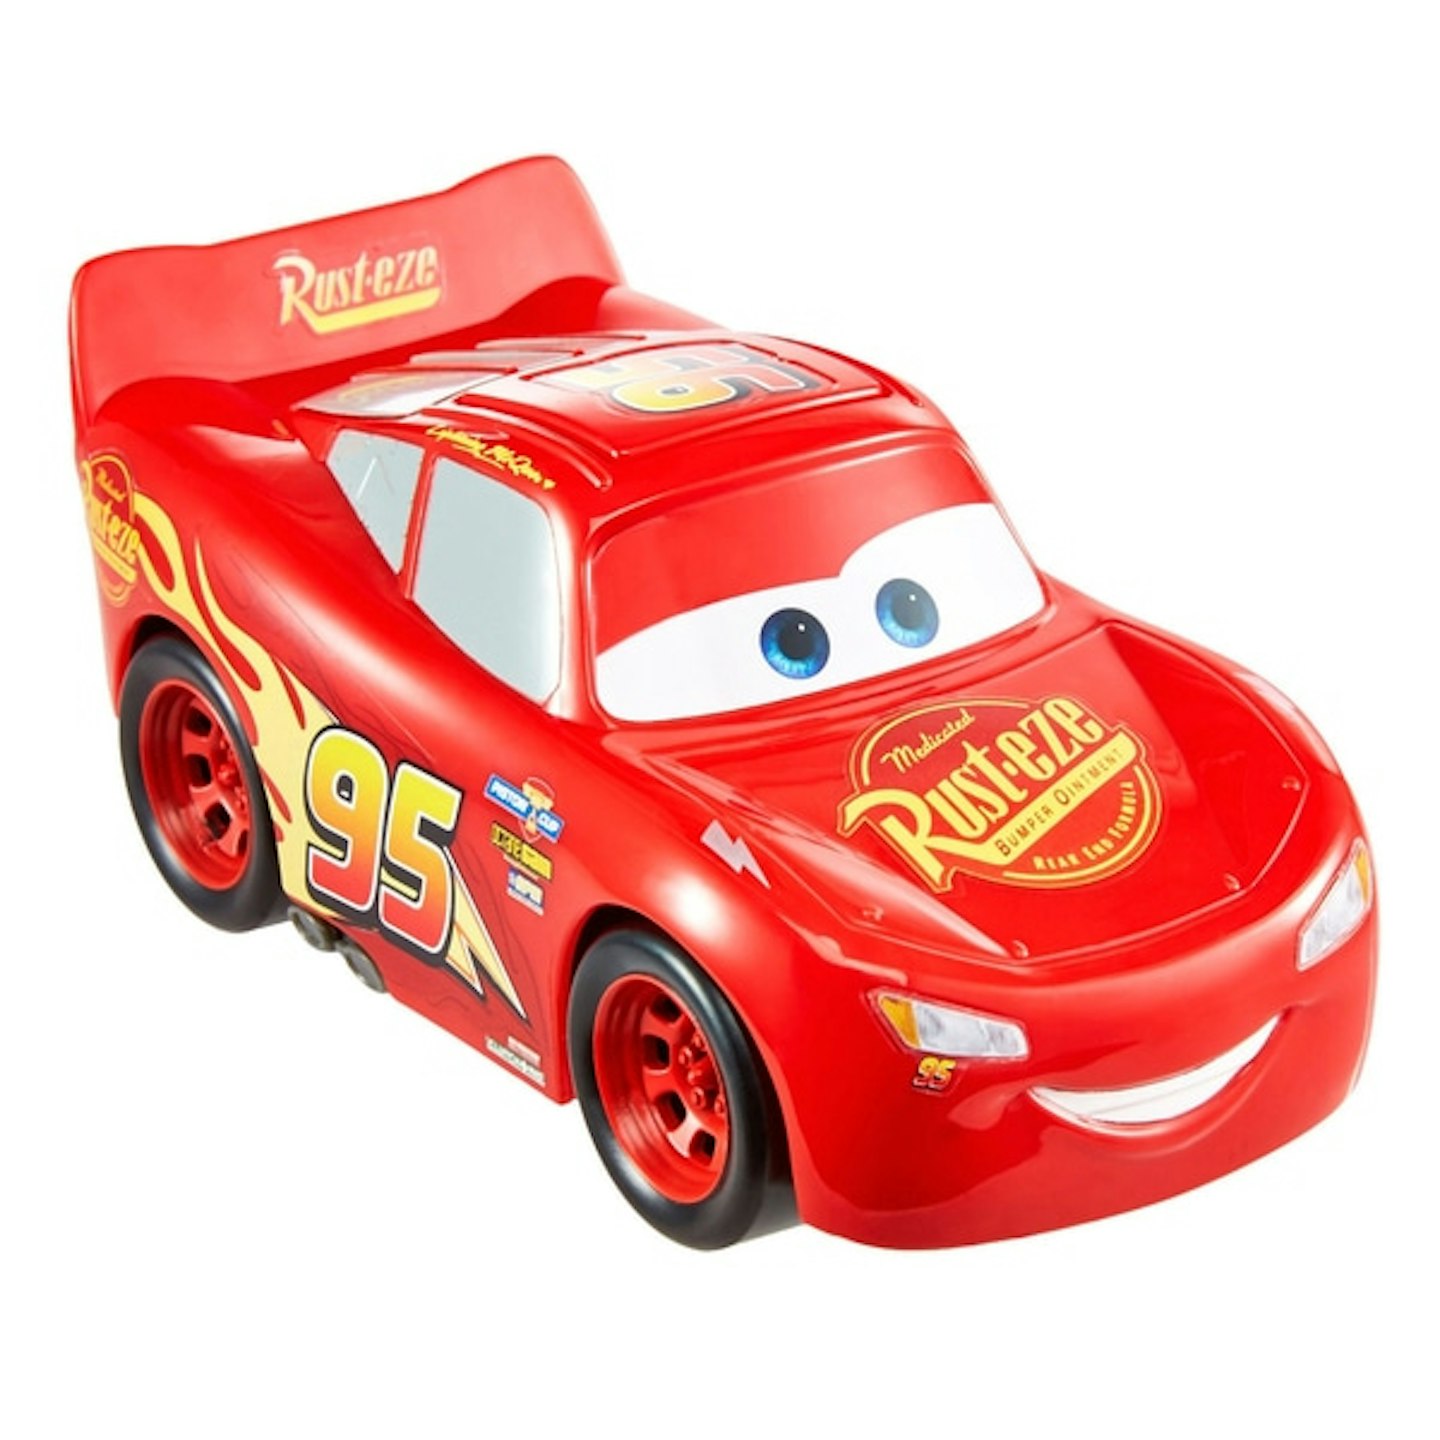 Disney Pixar Cars Figurine Playset